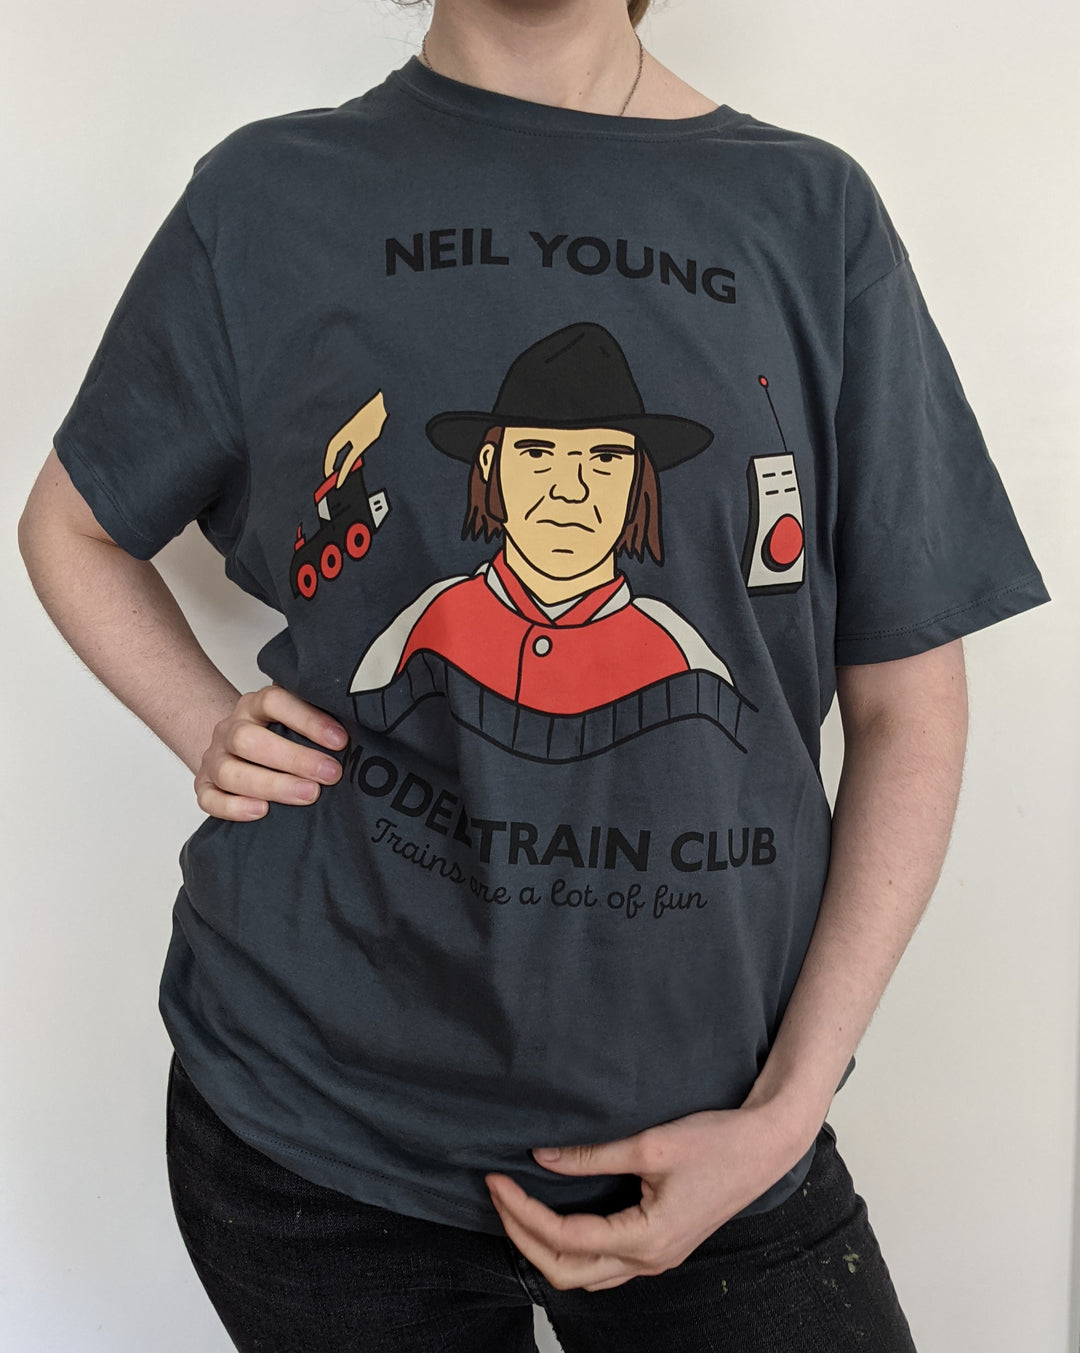 Neil Young Model Train Club Shirt